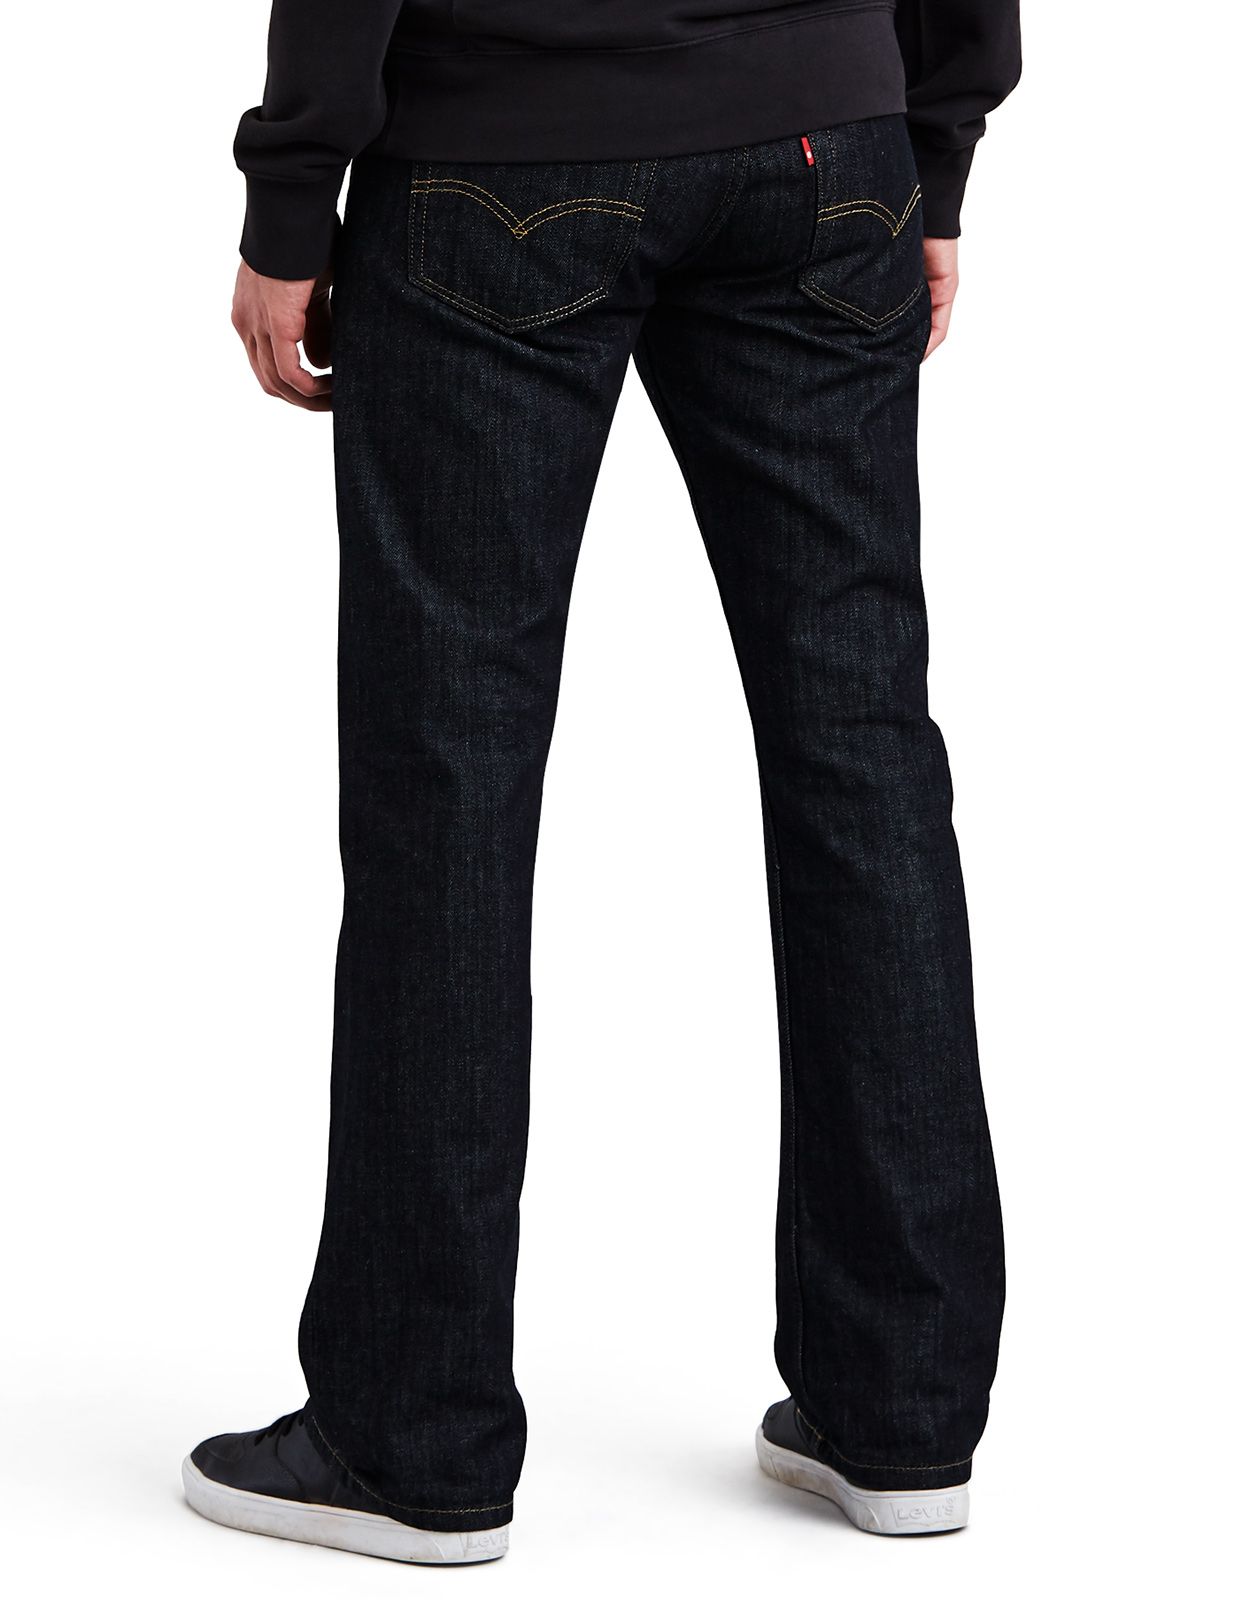 Levi's Men's 527 Low Rise Slim Fit Boot Jeans - Tumbled Rigid